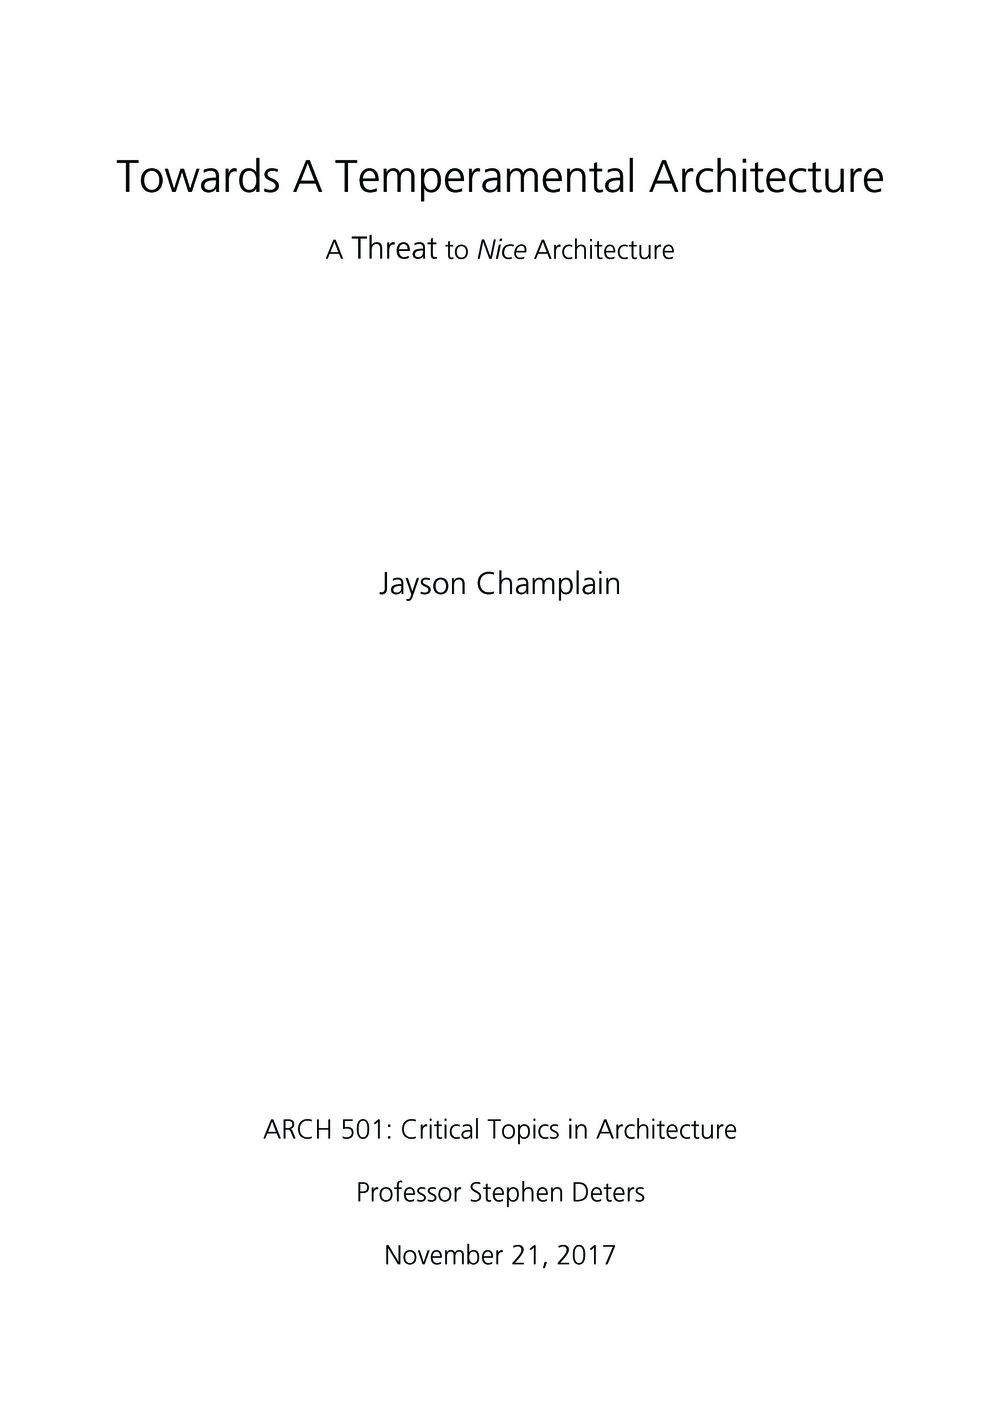 CHAMPLAIN_THESIS-TEMPERAMENTAL ARCHITECTURE-1.jpg